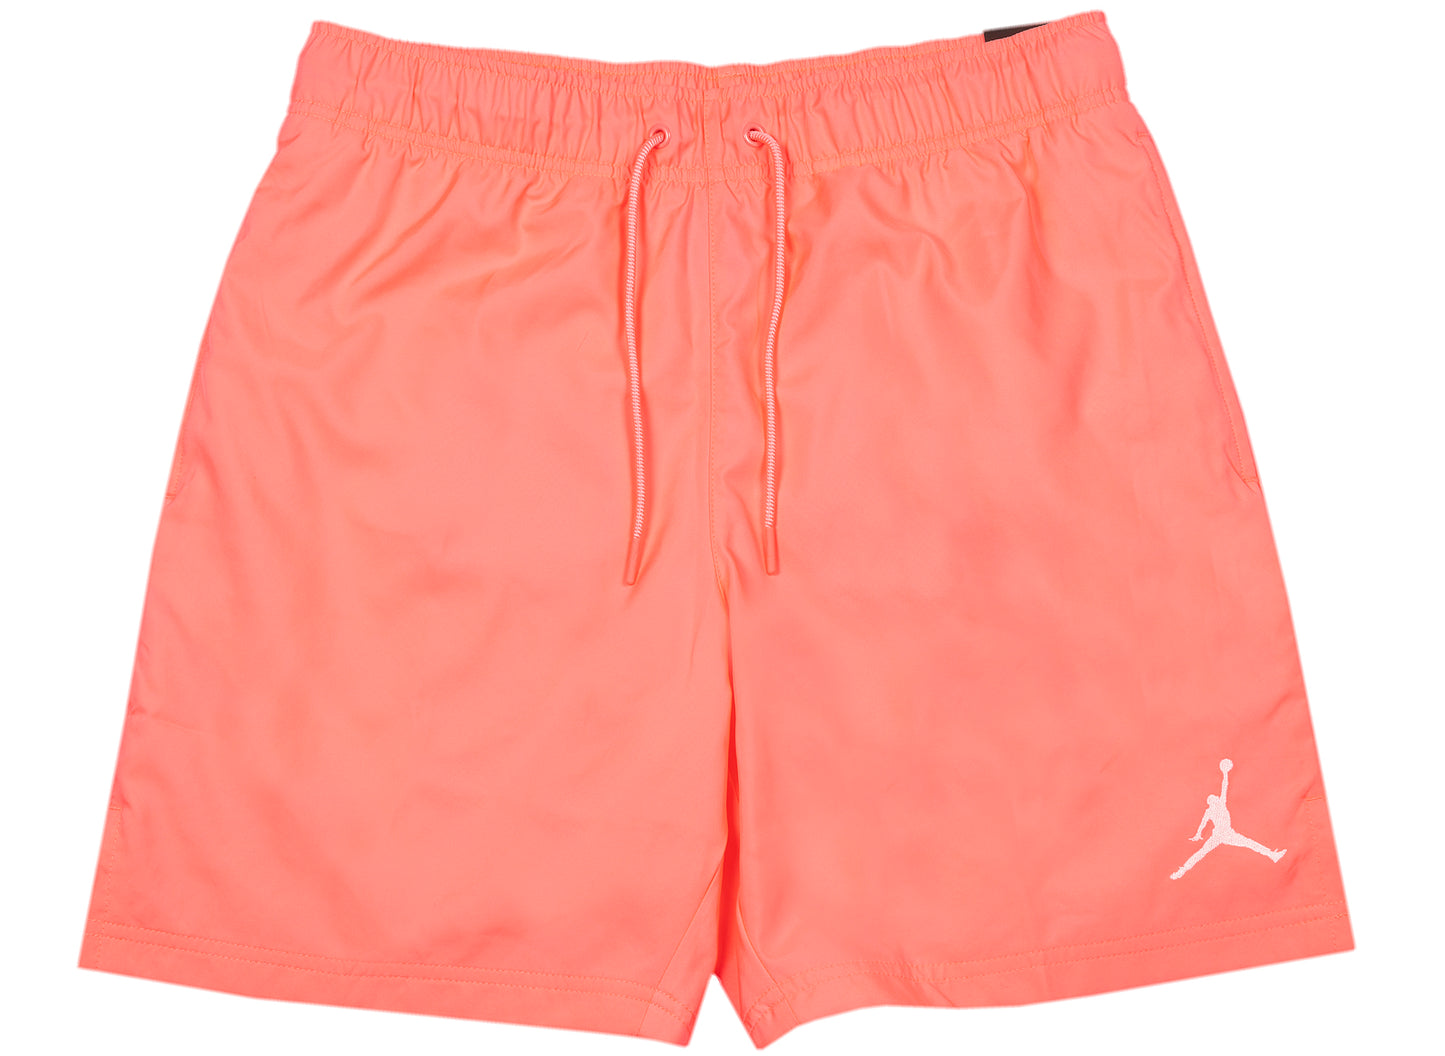 Jordan Jumpman Poolside Shorts in Pink